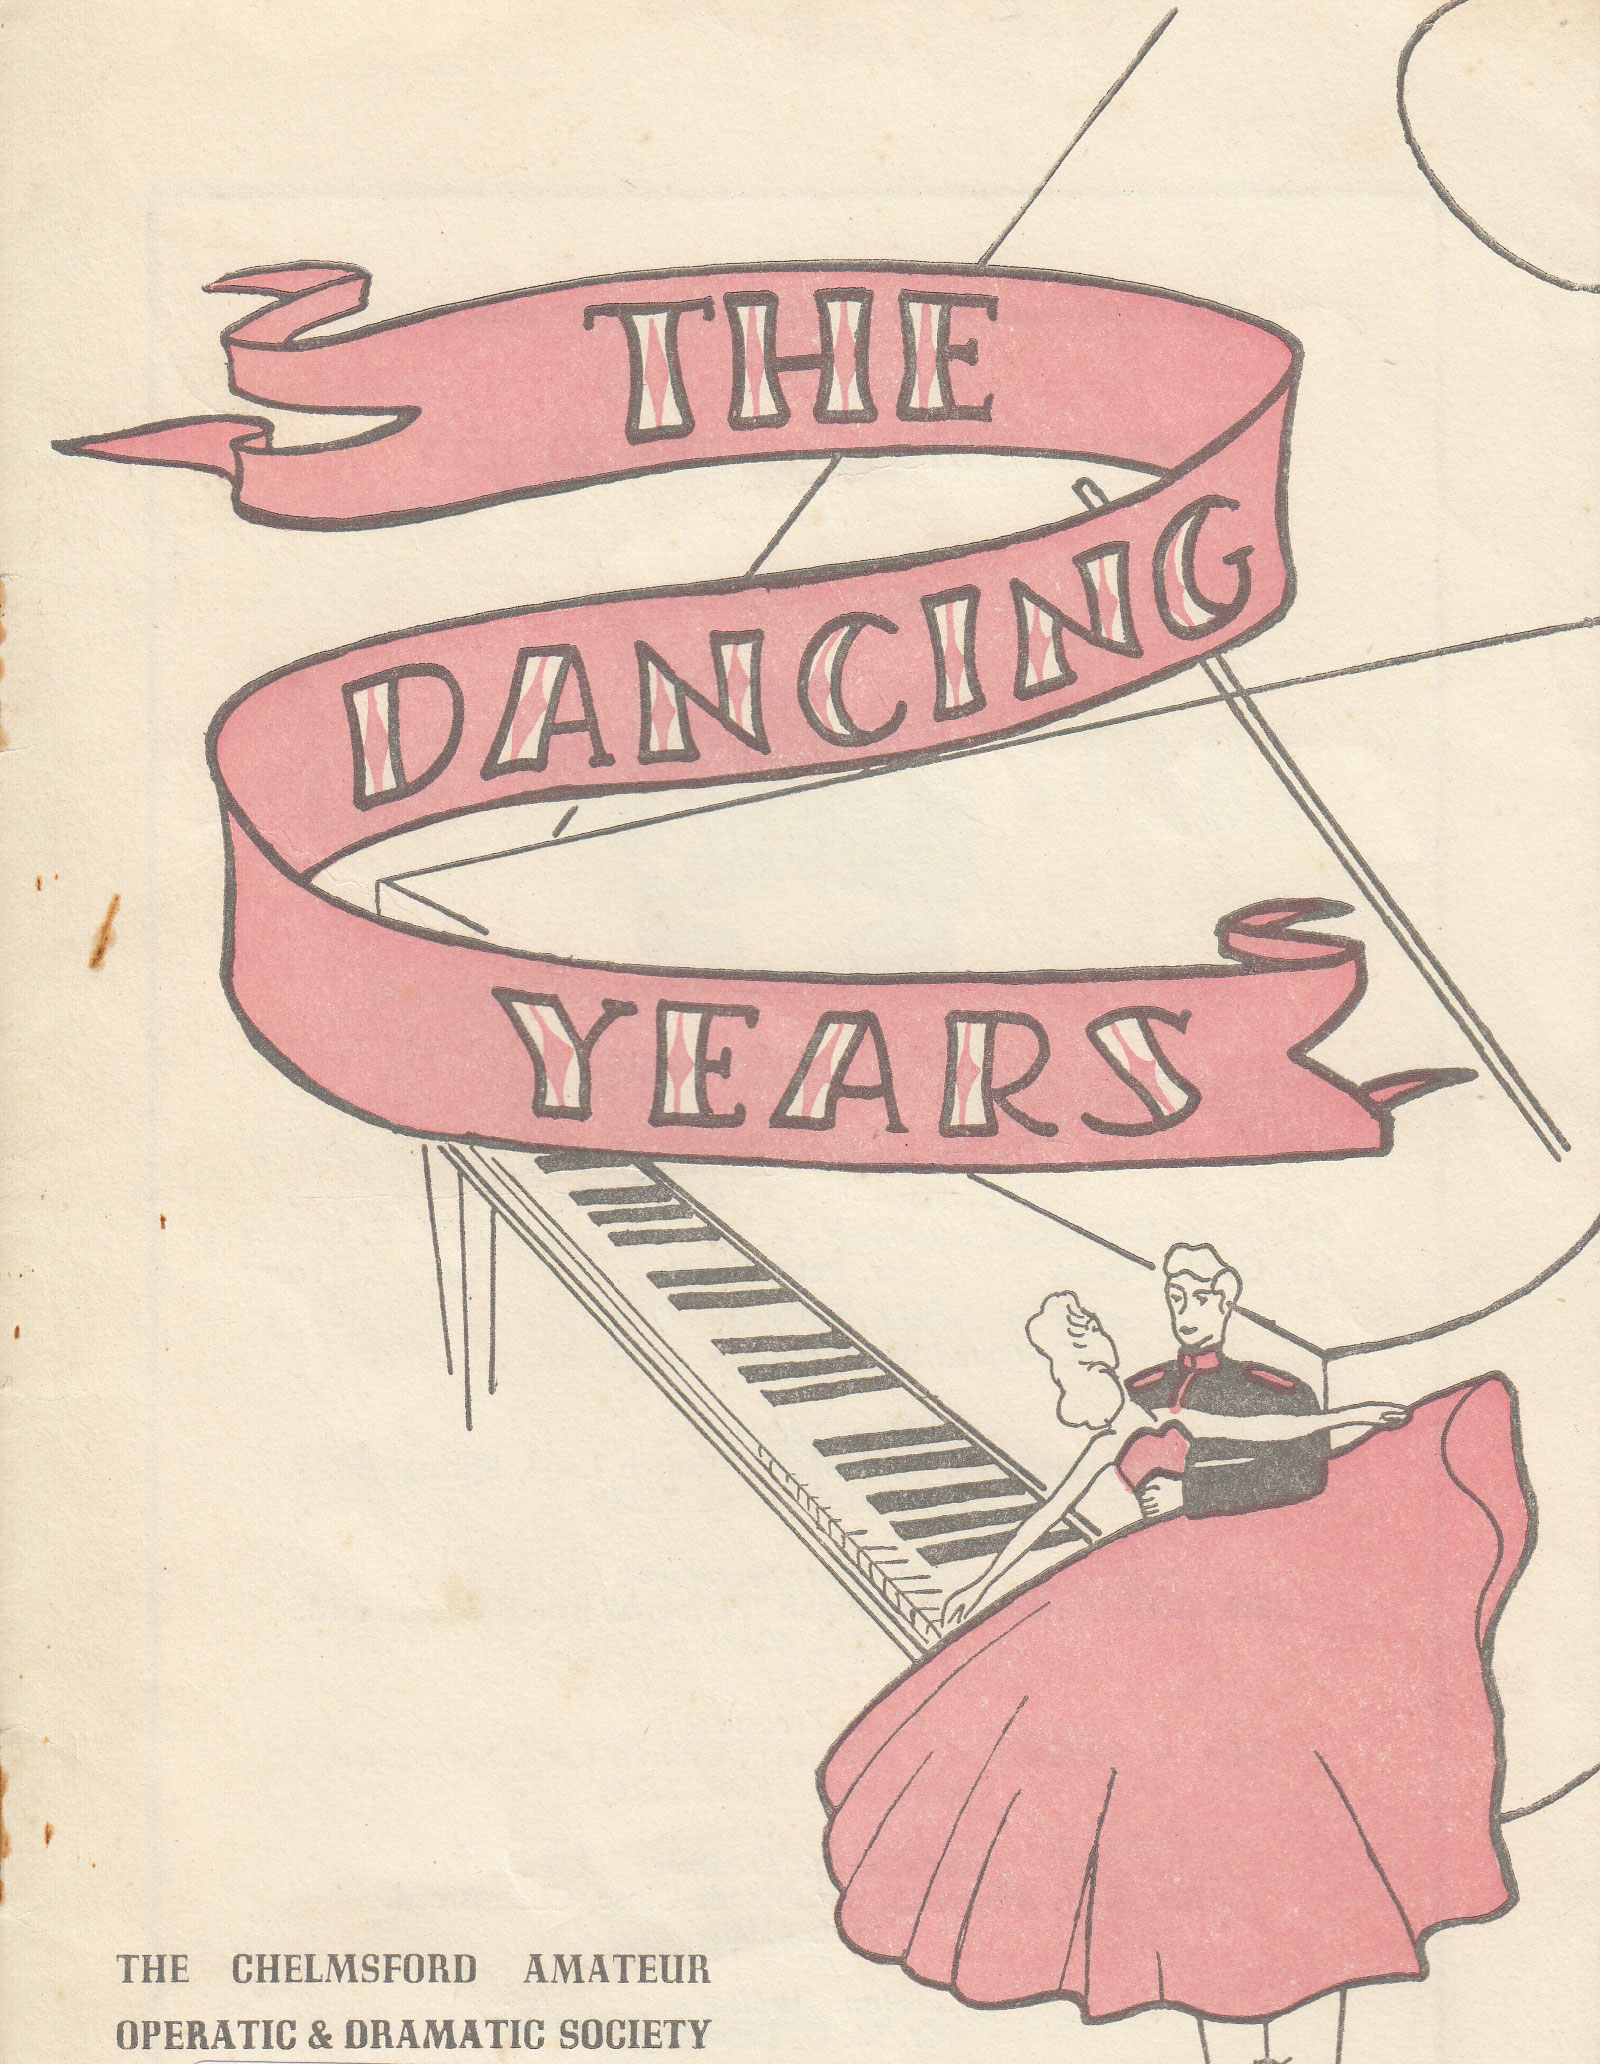 The Dancing Years